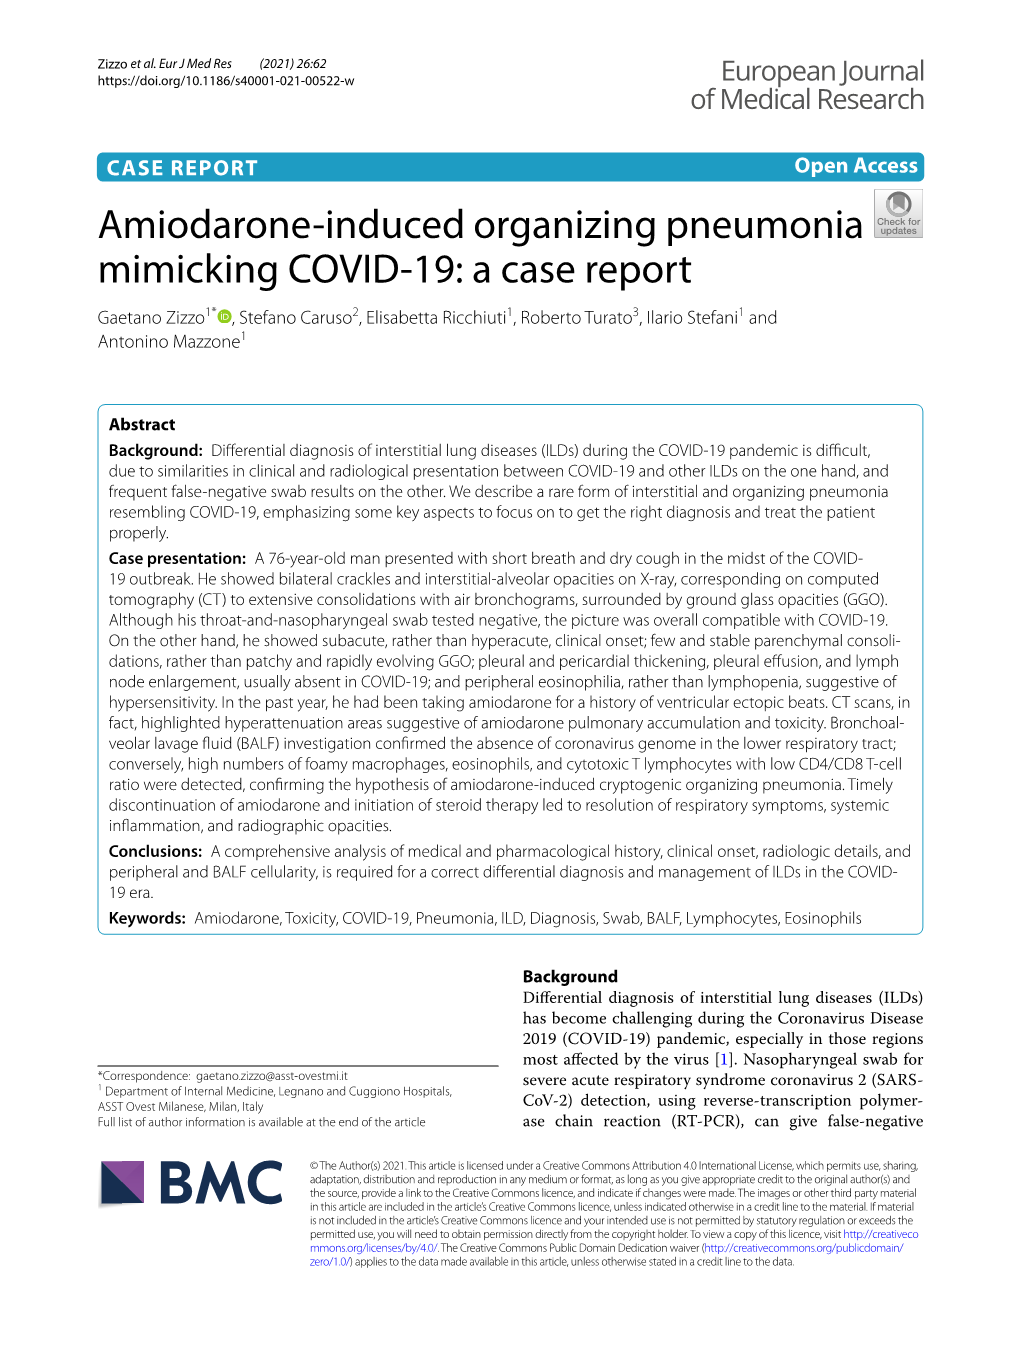 Amiodarone-Induced Organizing Pneumonia Mimicking COVID-19